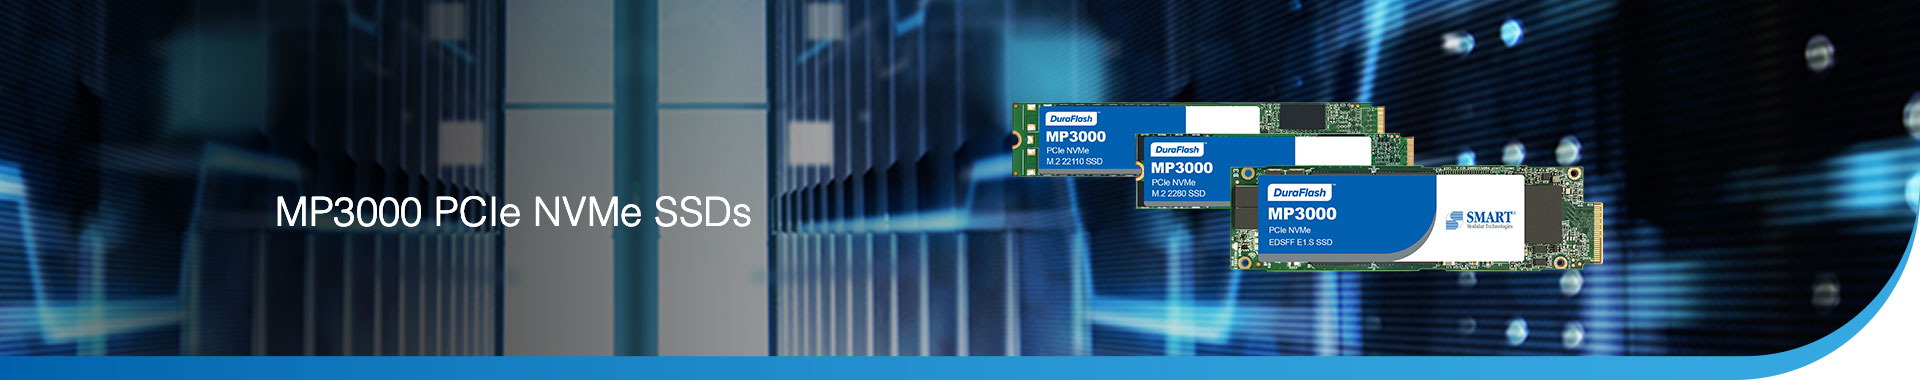 SMART_MP3000_PCIe_NVMe_Industrial_SSD